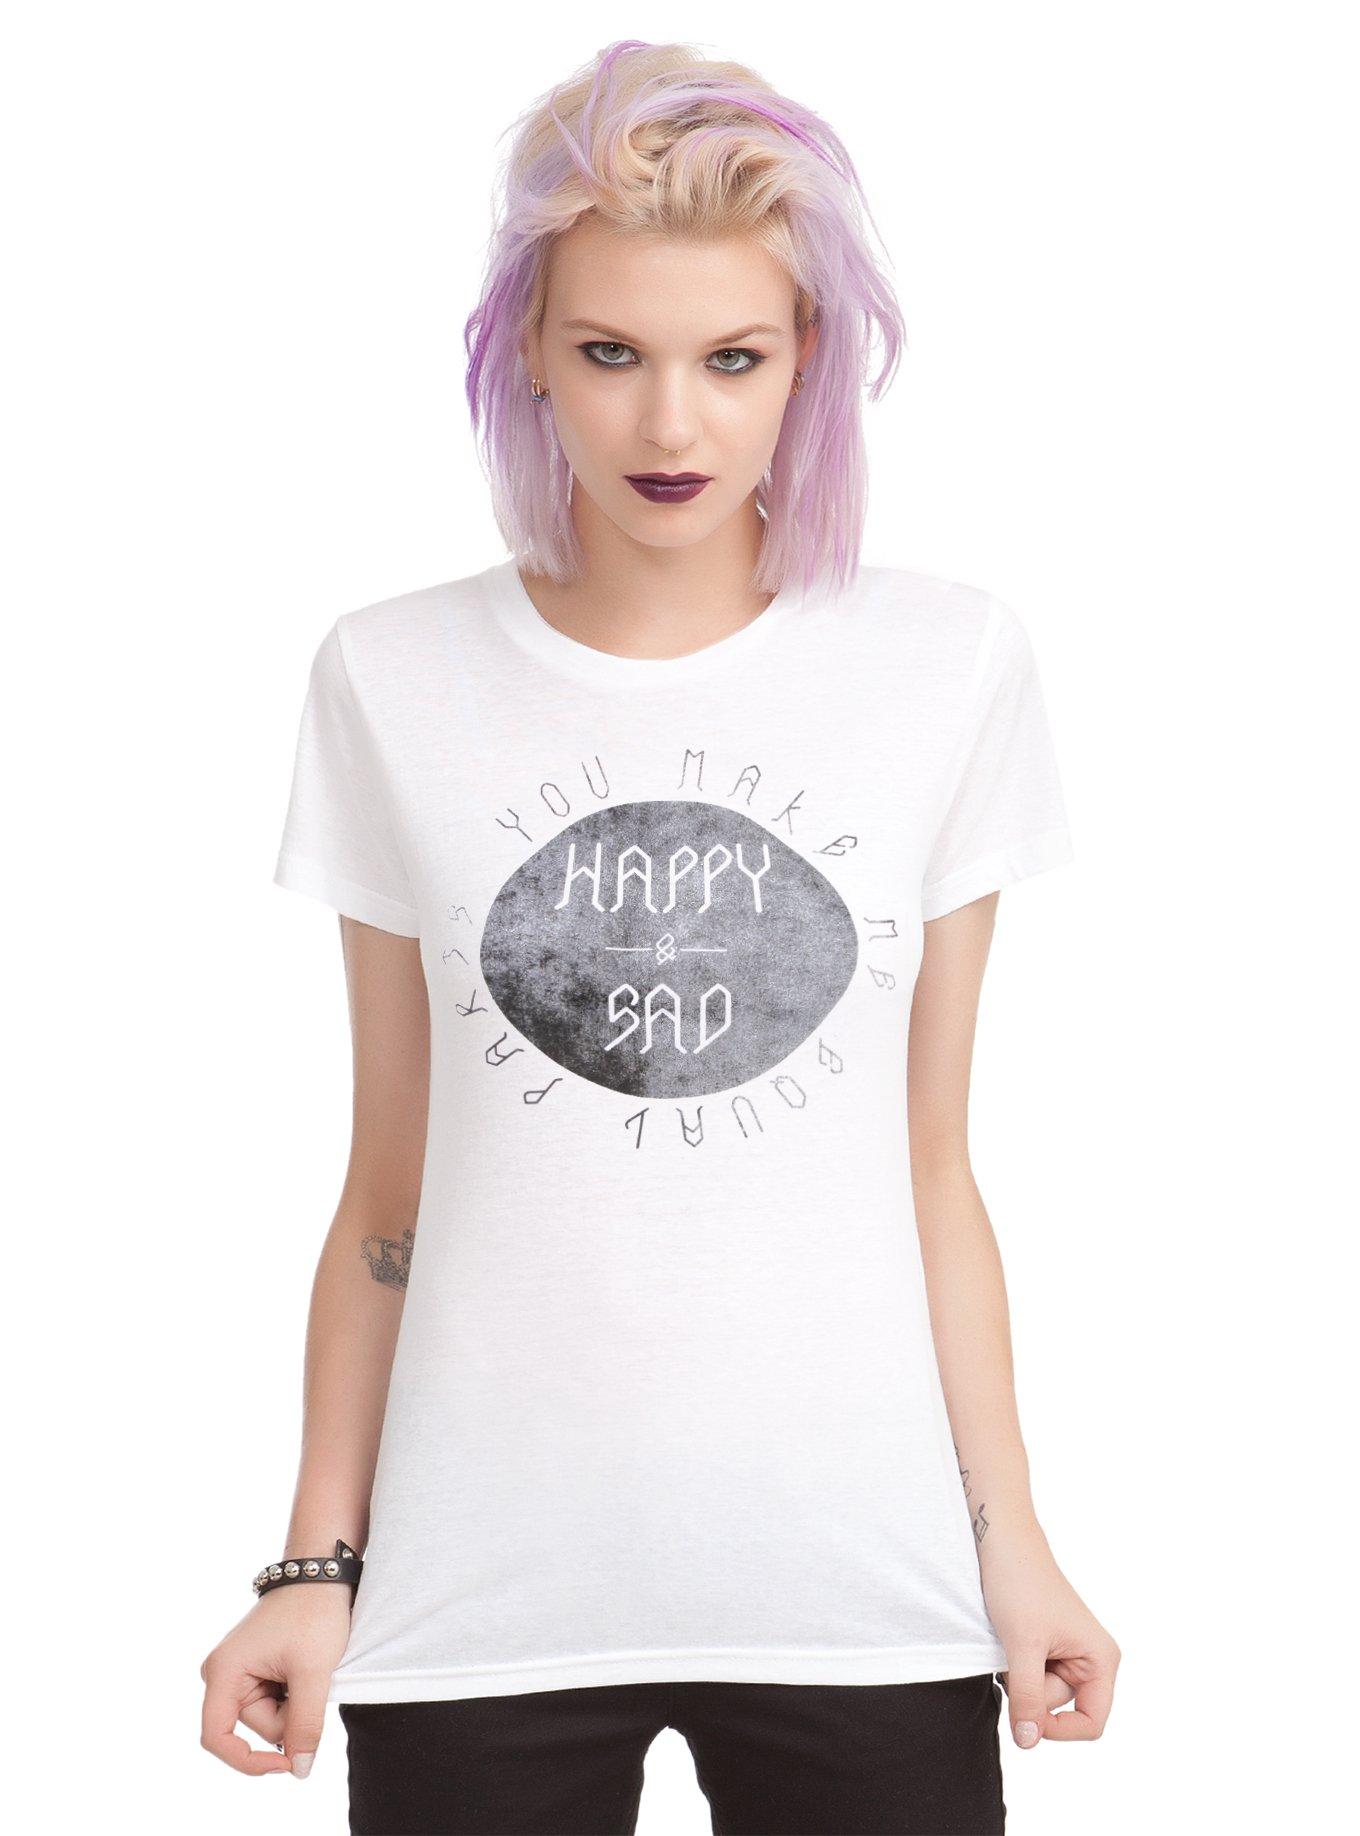 Equal Parts Happy & Sad Girls T-Shirt | Hot Topic